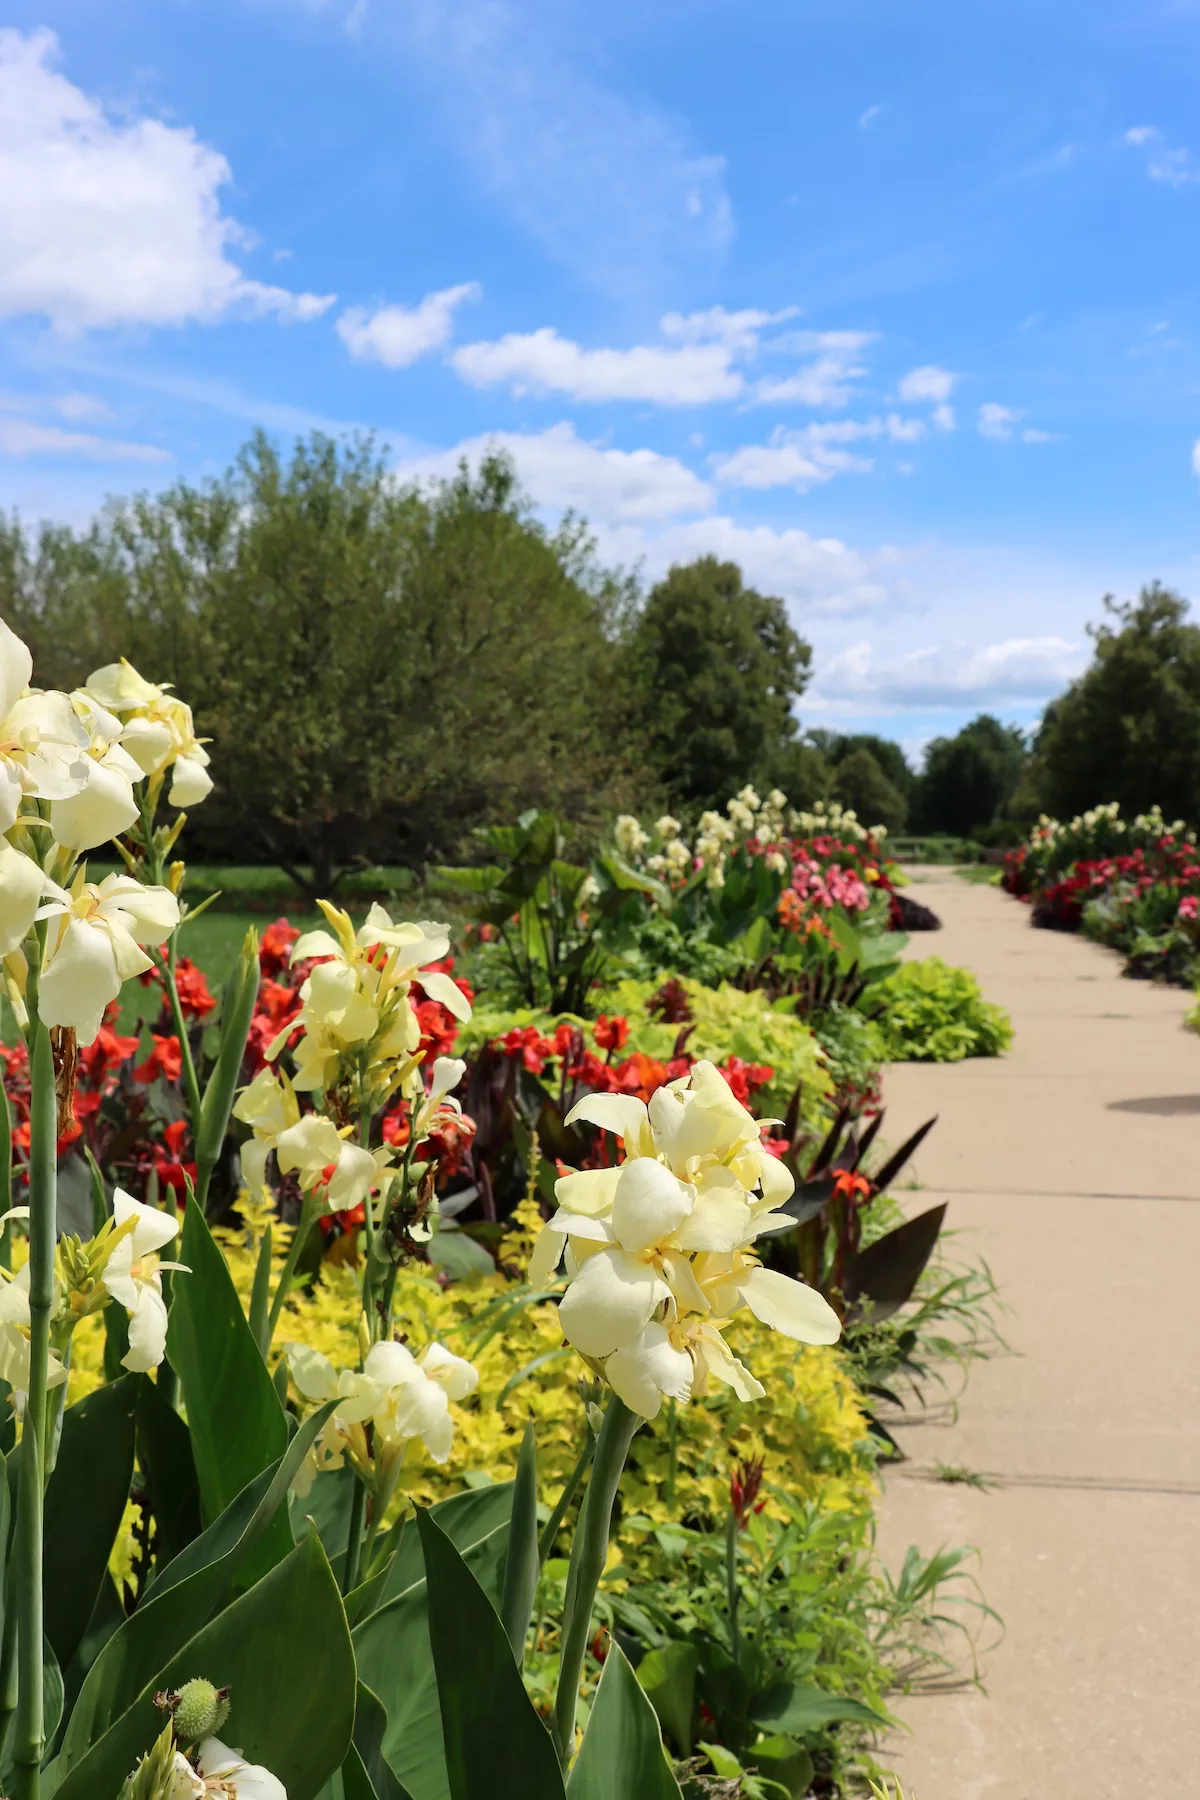 Flowers at the University of Illinois Arboretum in Urbana, Illinois